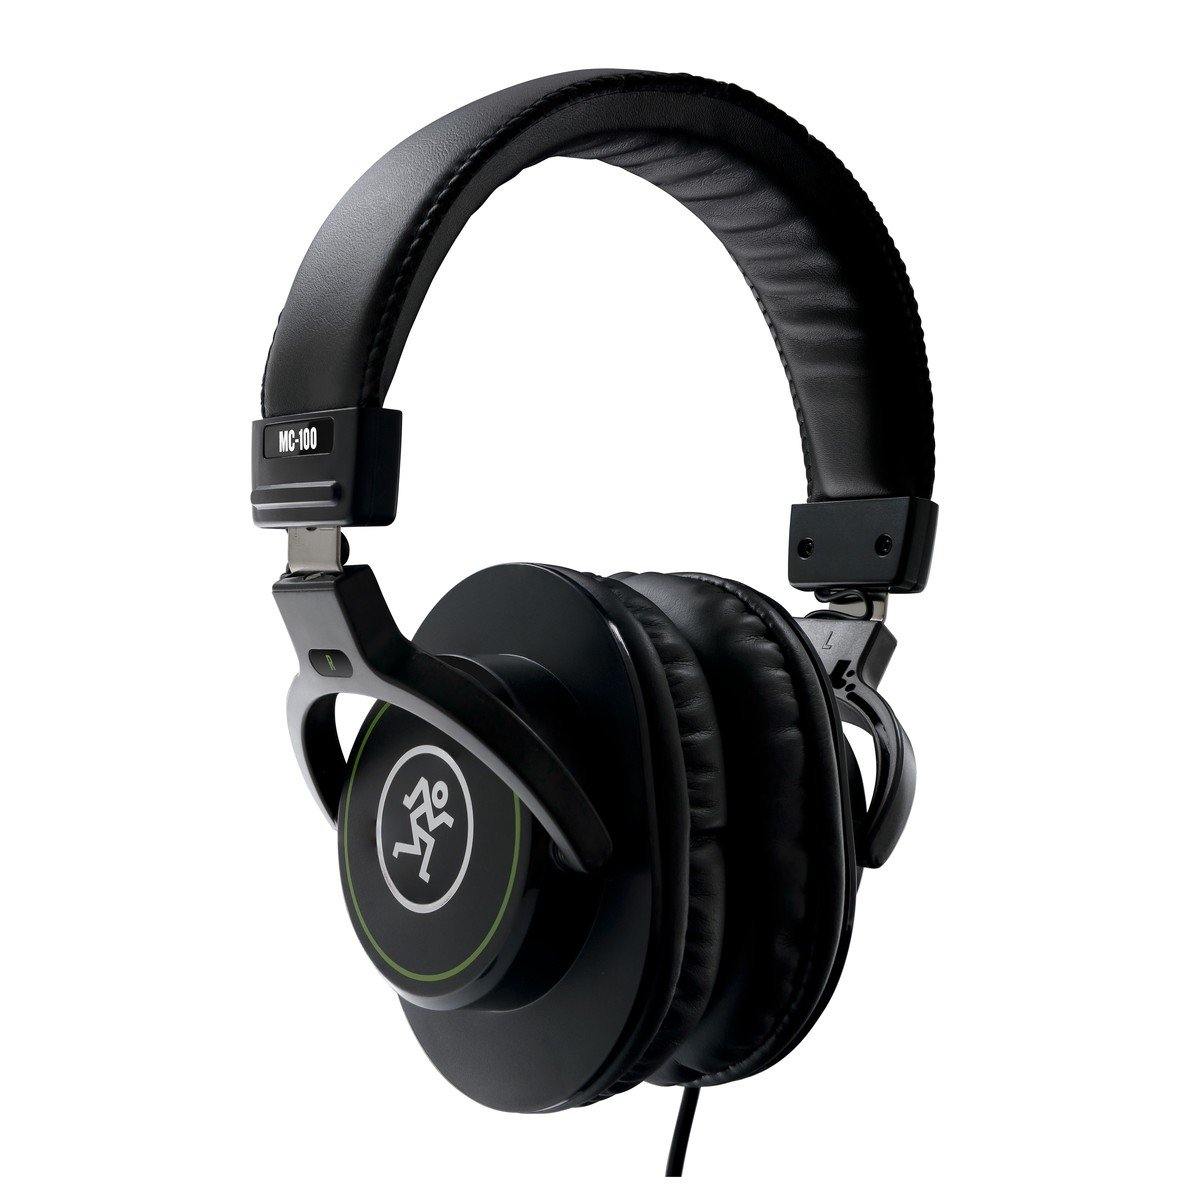 Mackie MC-100 Professional Headphones - DY Pro Audio